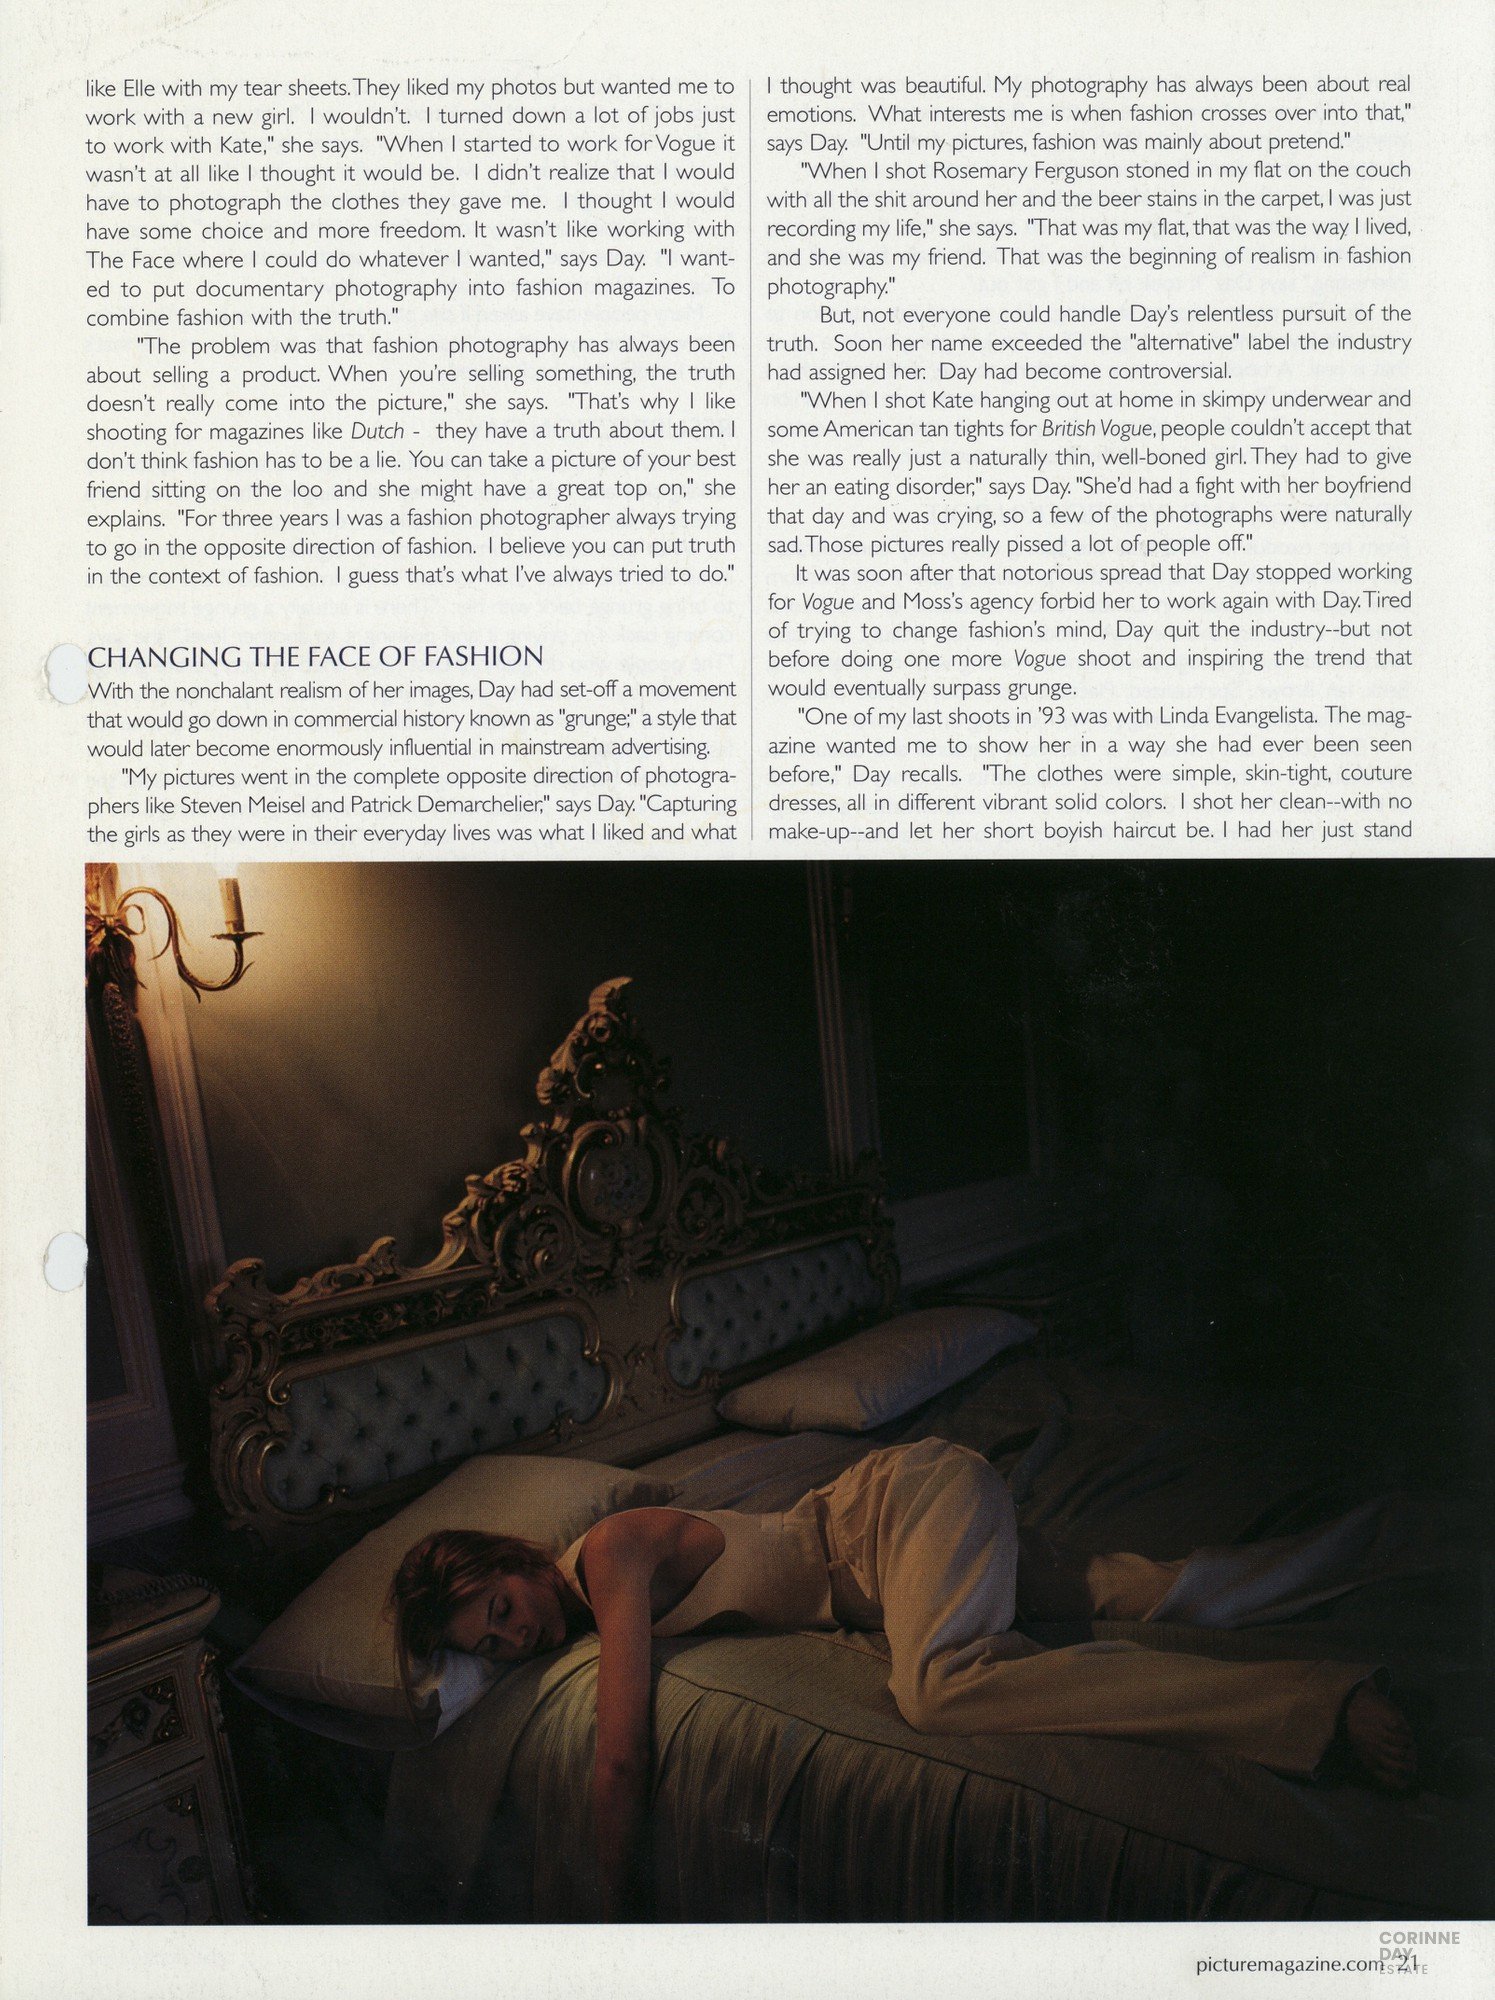 Reality Bites, Picture Magazine, 2002 — Image 3 of 5